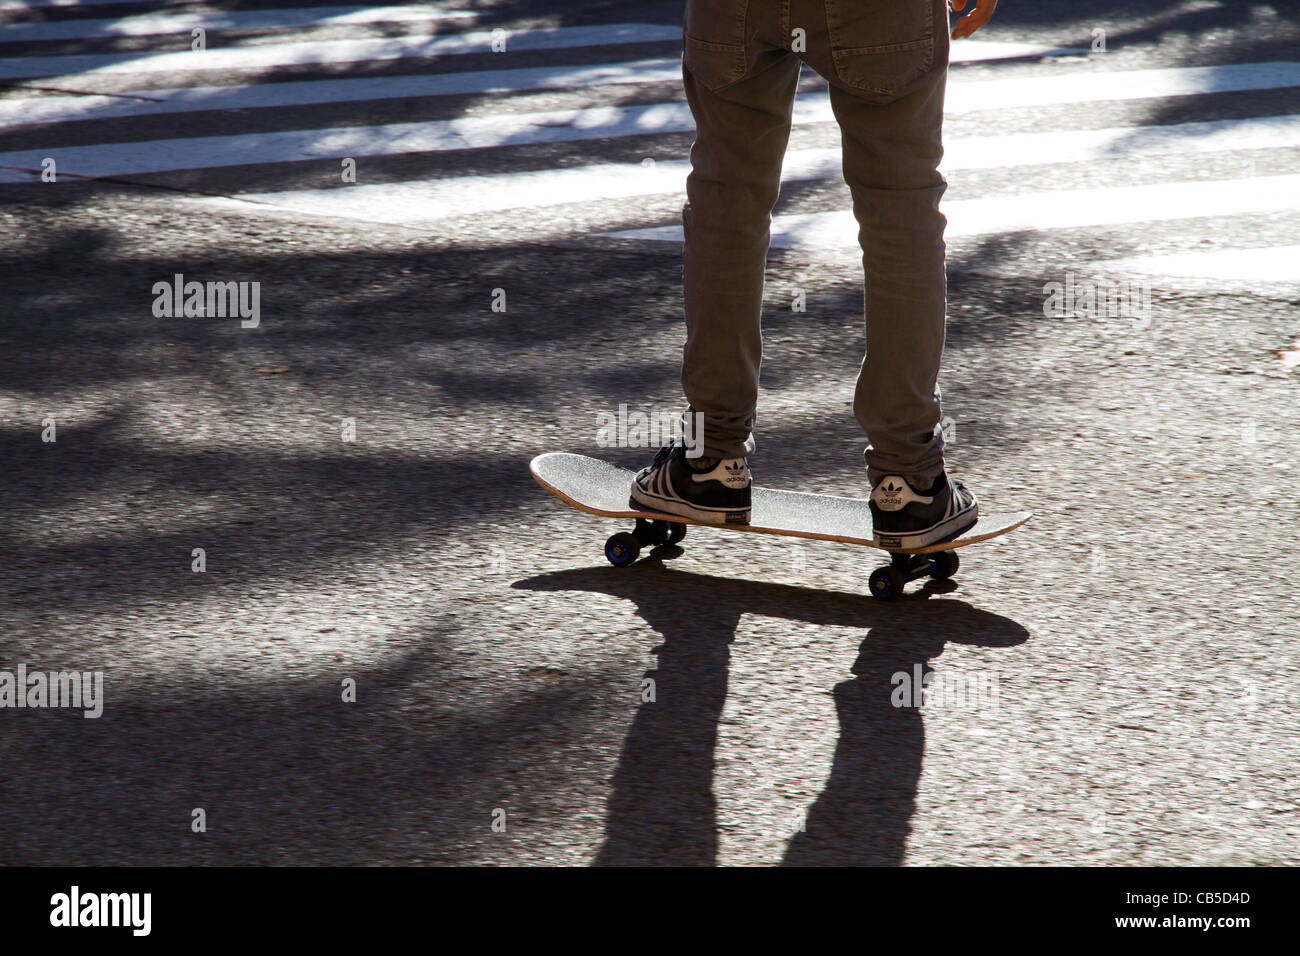 person on skateboard skateboarding in action sport Stock Photo